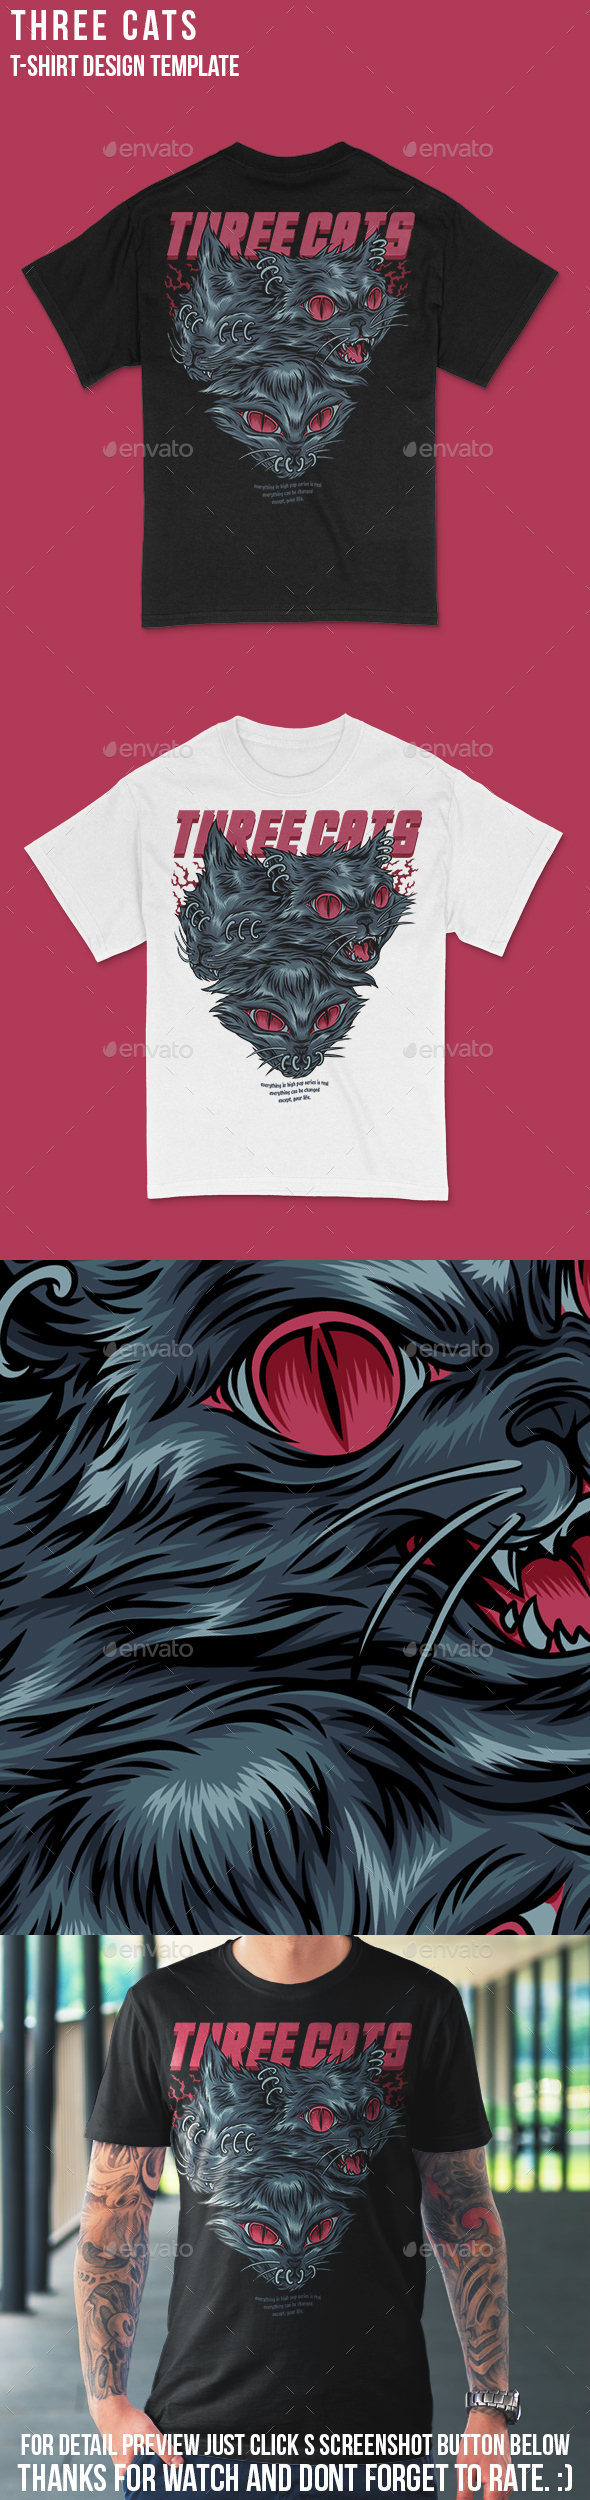 [DOWNLOAD]Three Cats T-Shirt Design Template